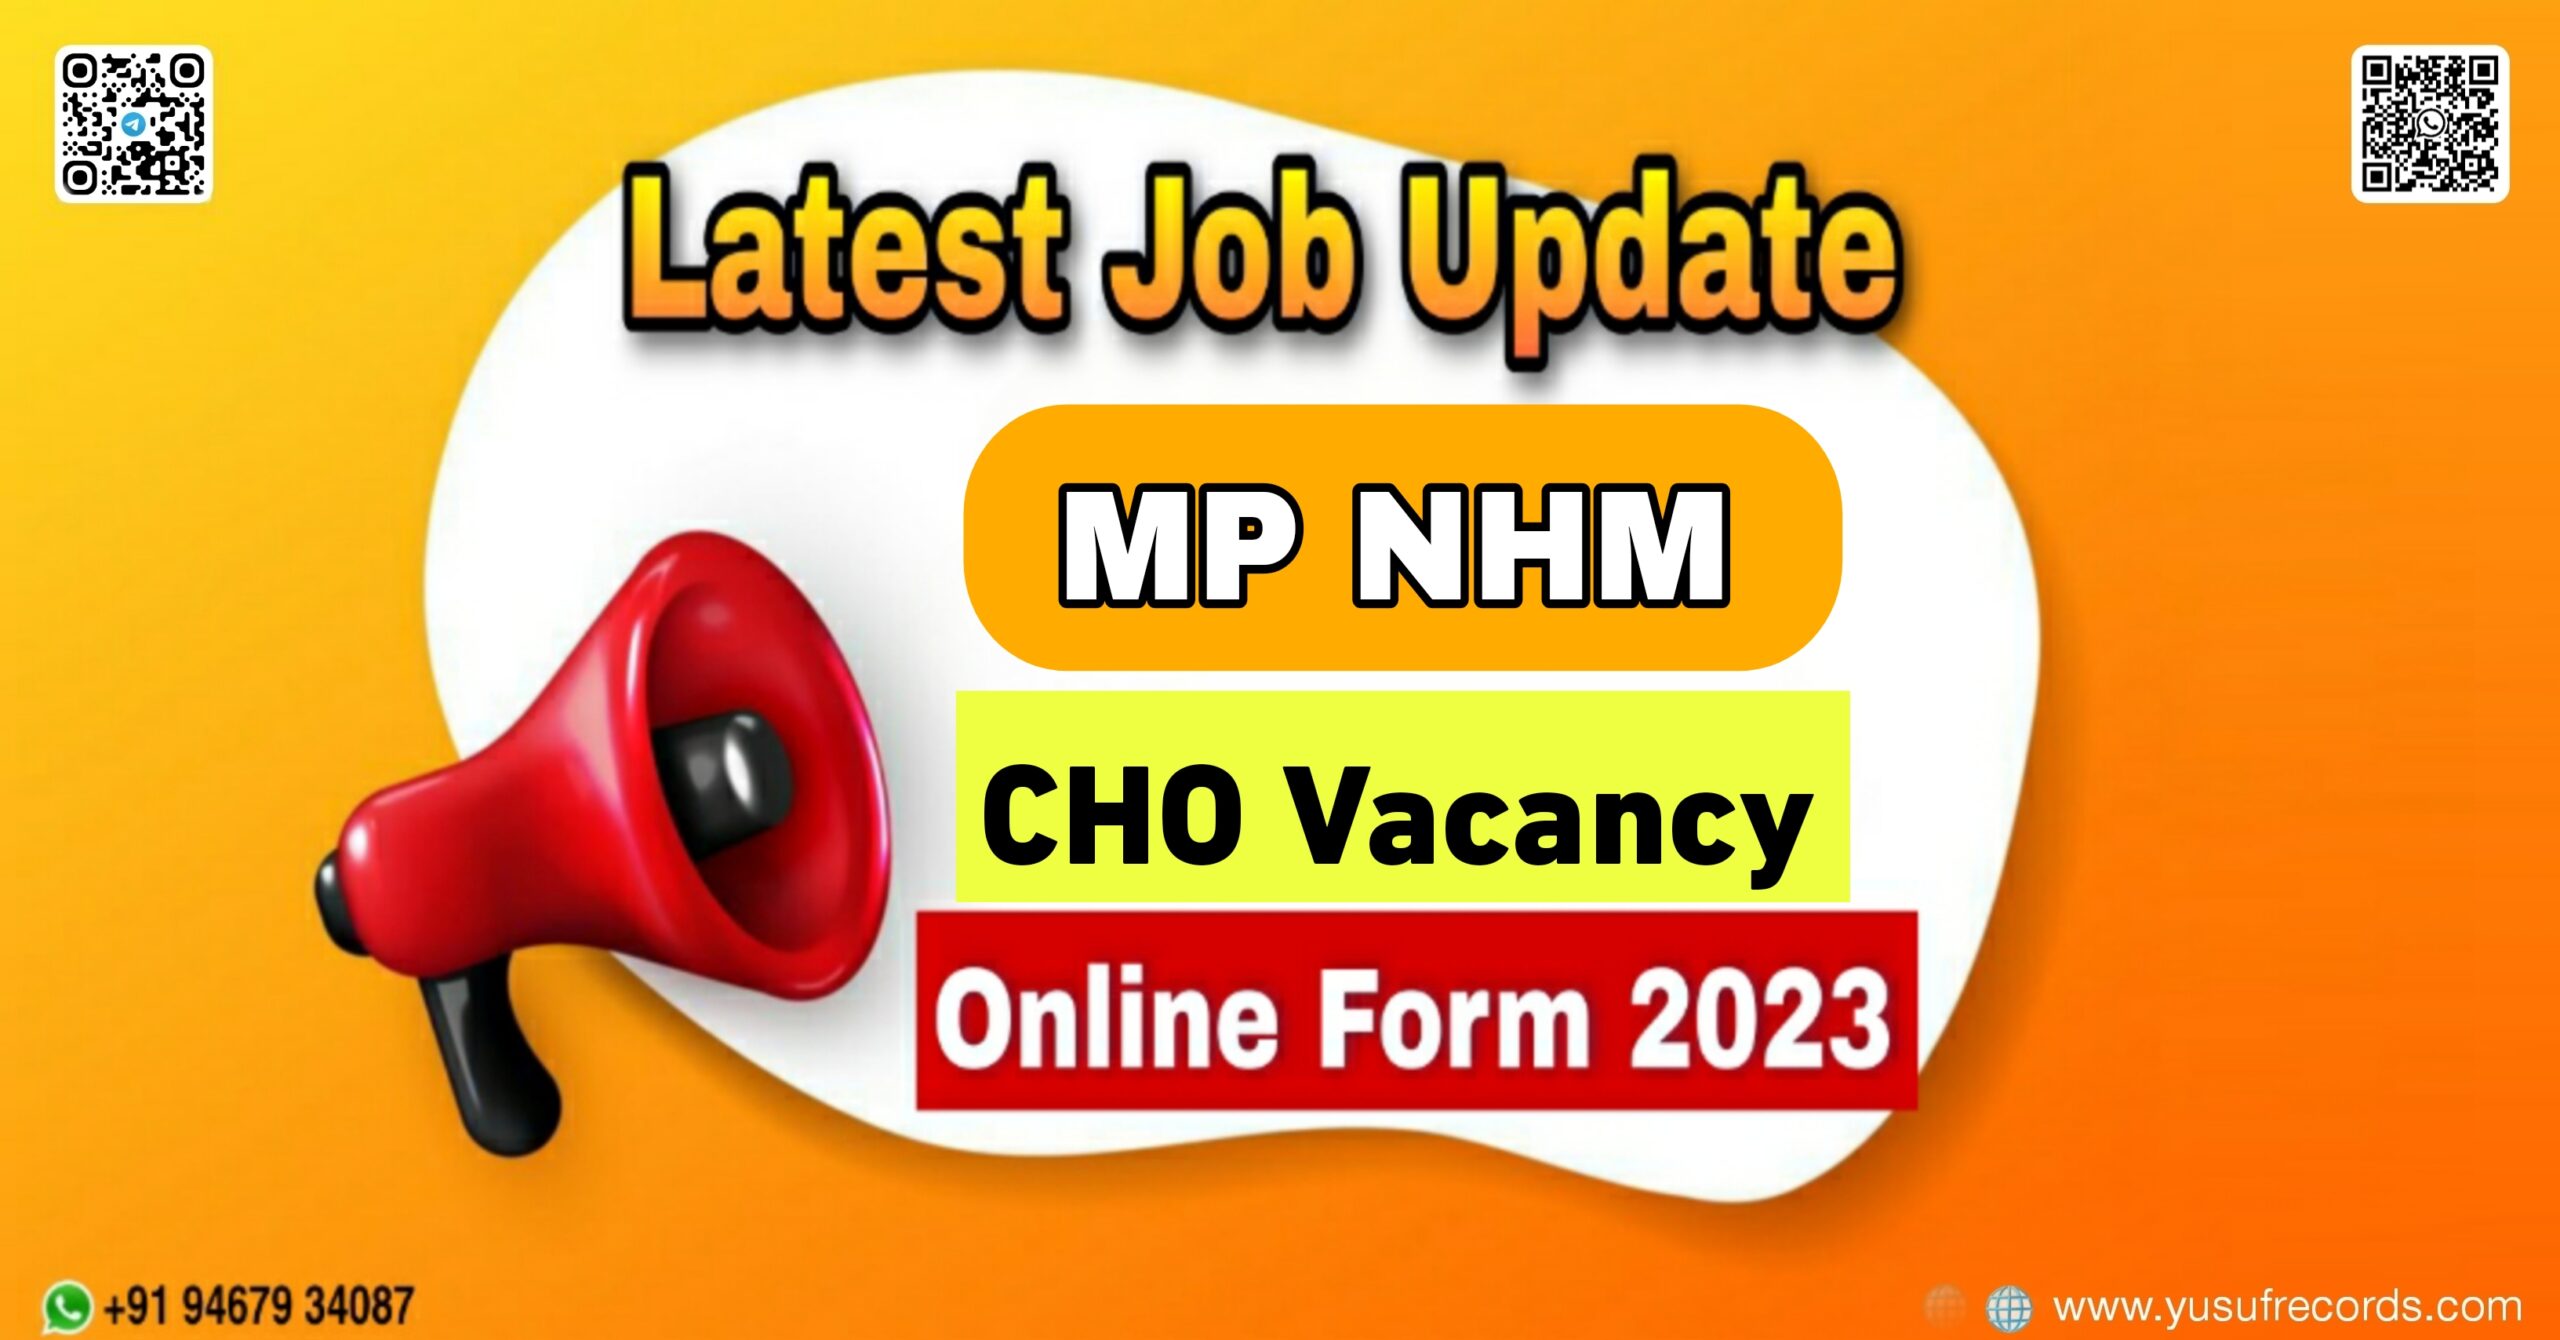 MP NHM CHO Vacancy Online Form 2023 yusufrecords